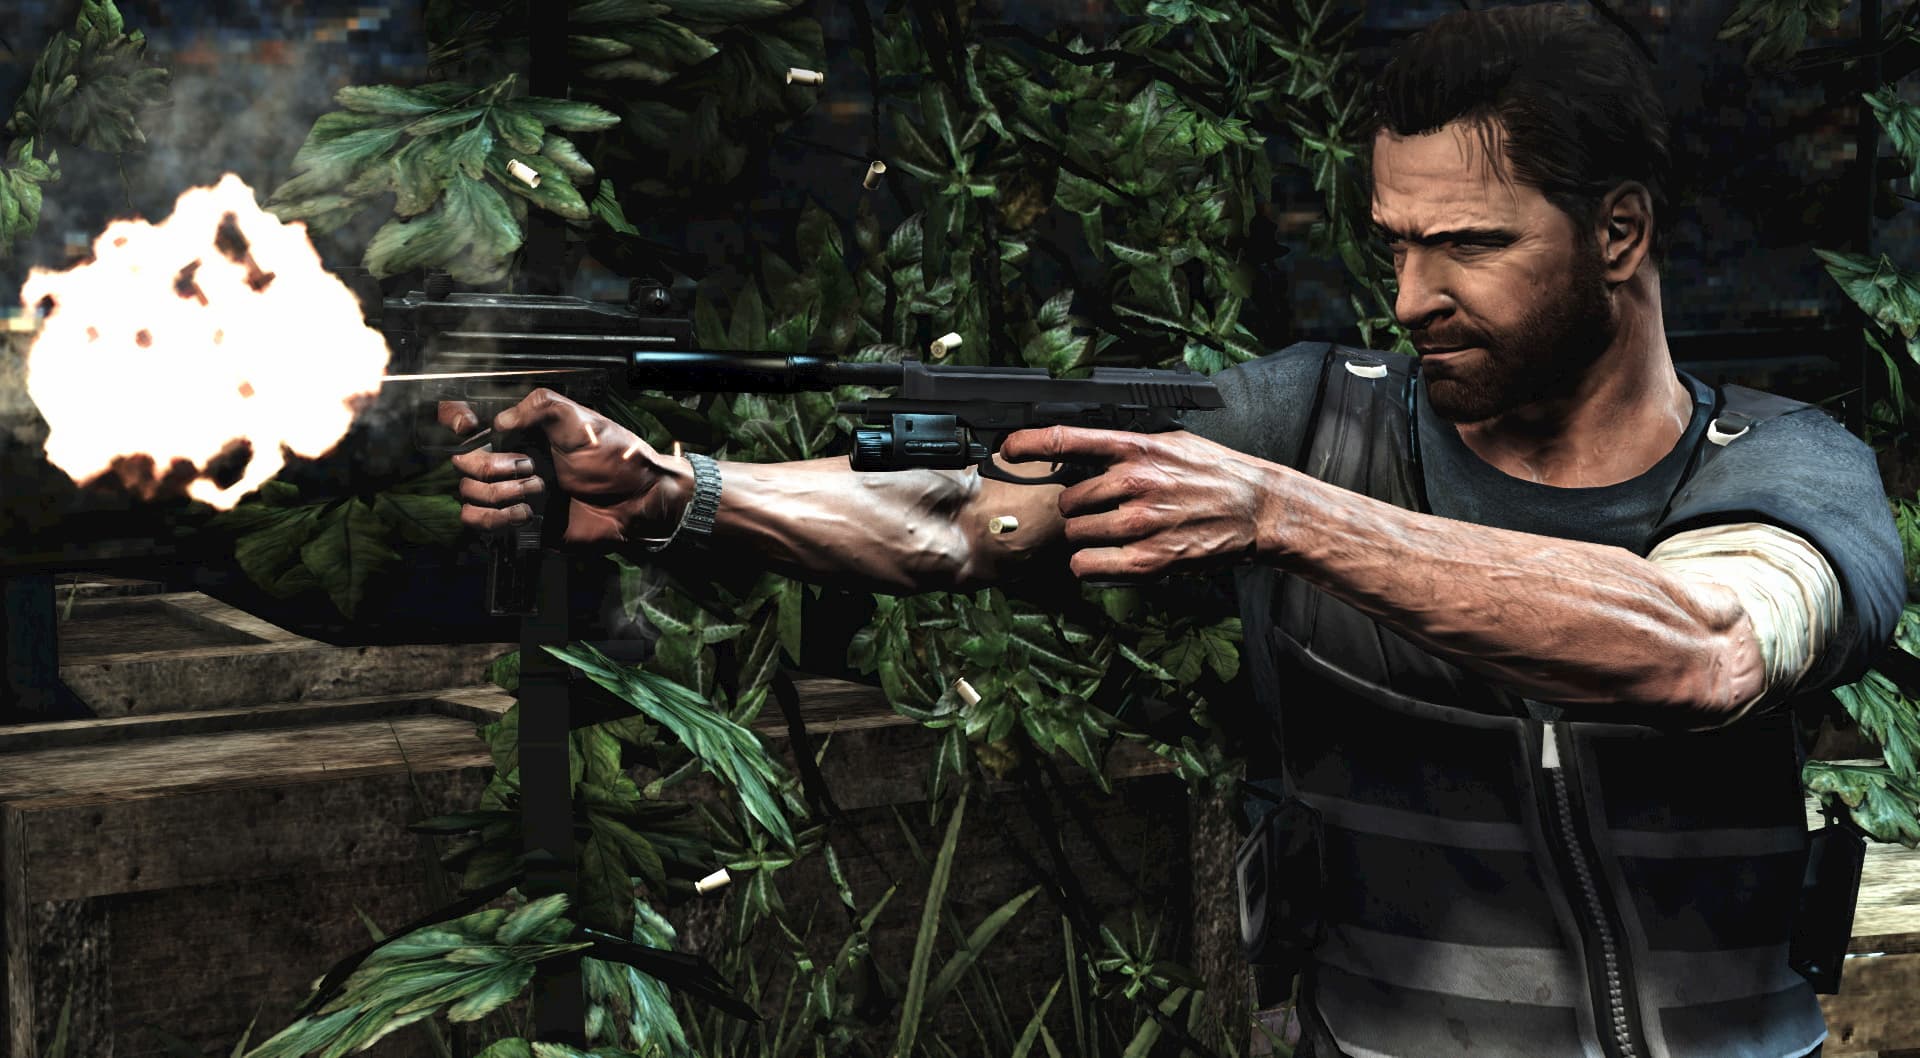 Buy Max Payne 3 Complete Pack Rockstar